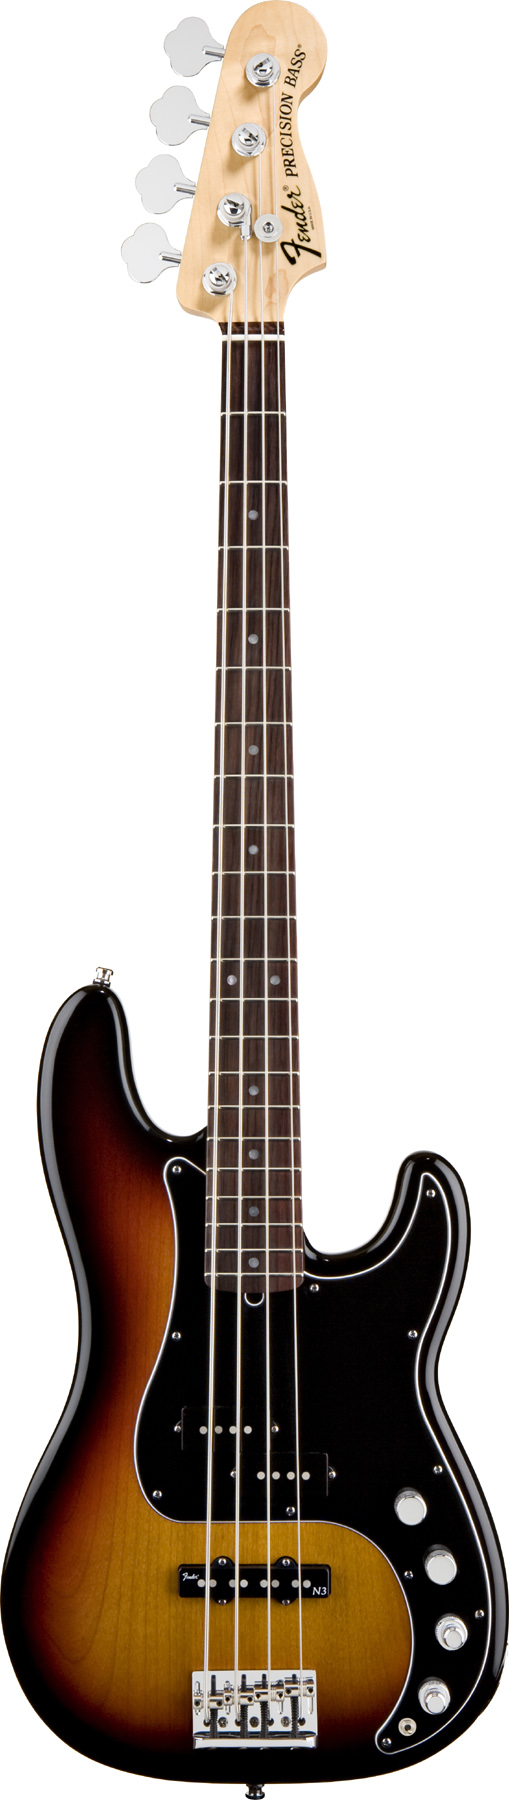 American Deluxe Precision Bass